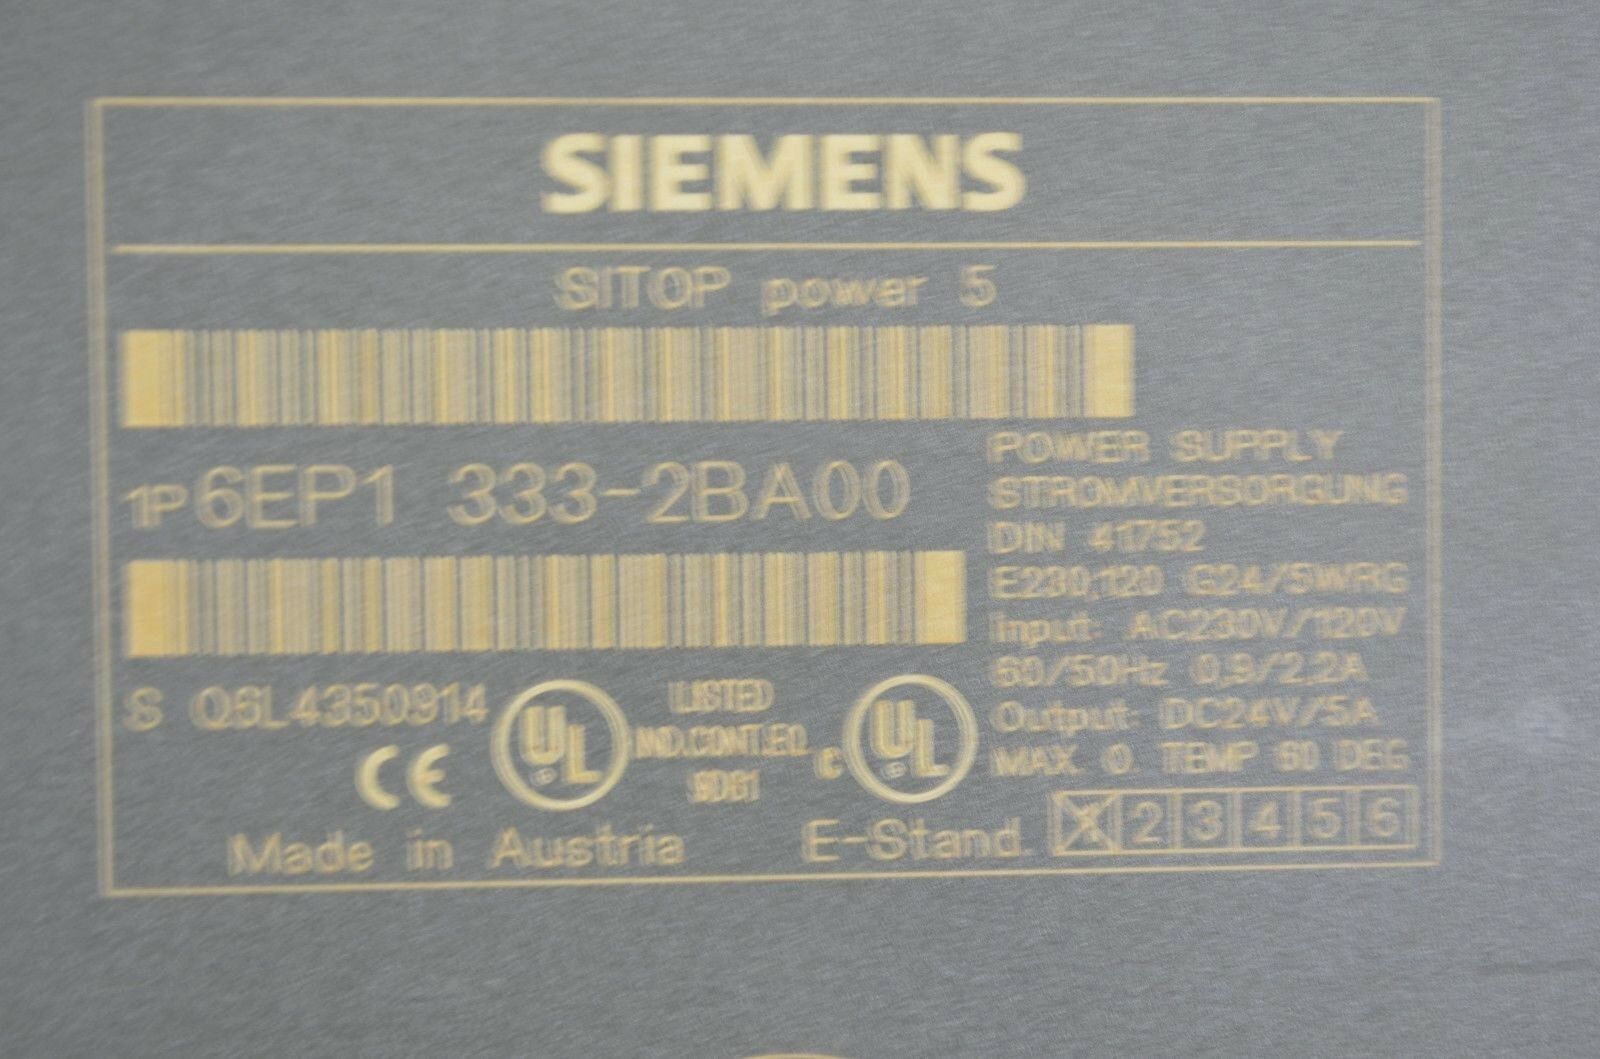 Siemens sitop power 5 A geregelte Stromversorgung 6EP1 333-2BA00 ( 6EP1333-2BA00 )